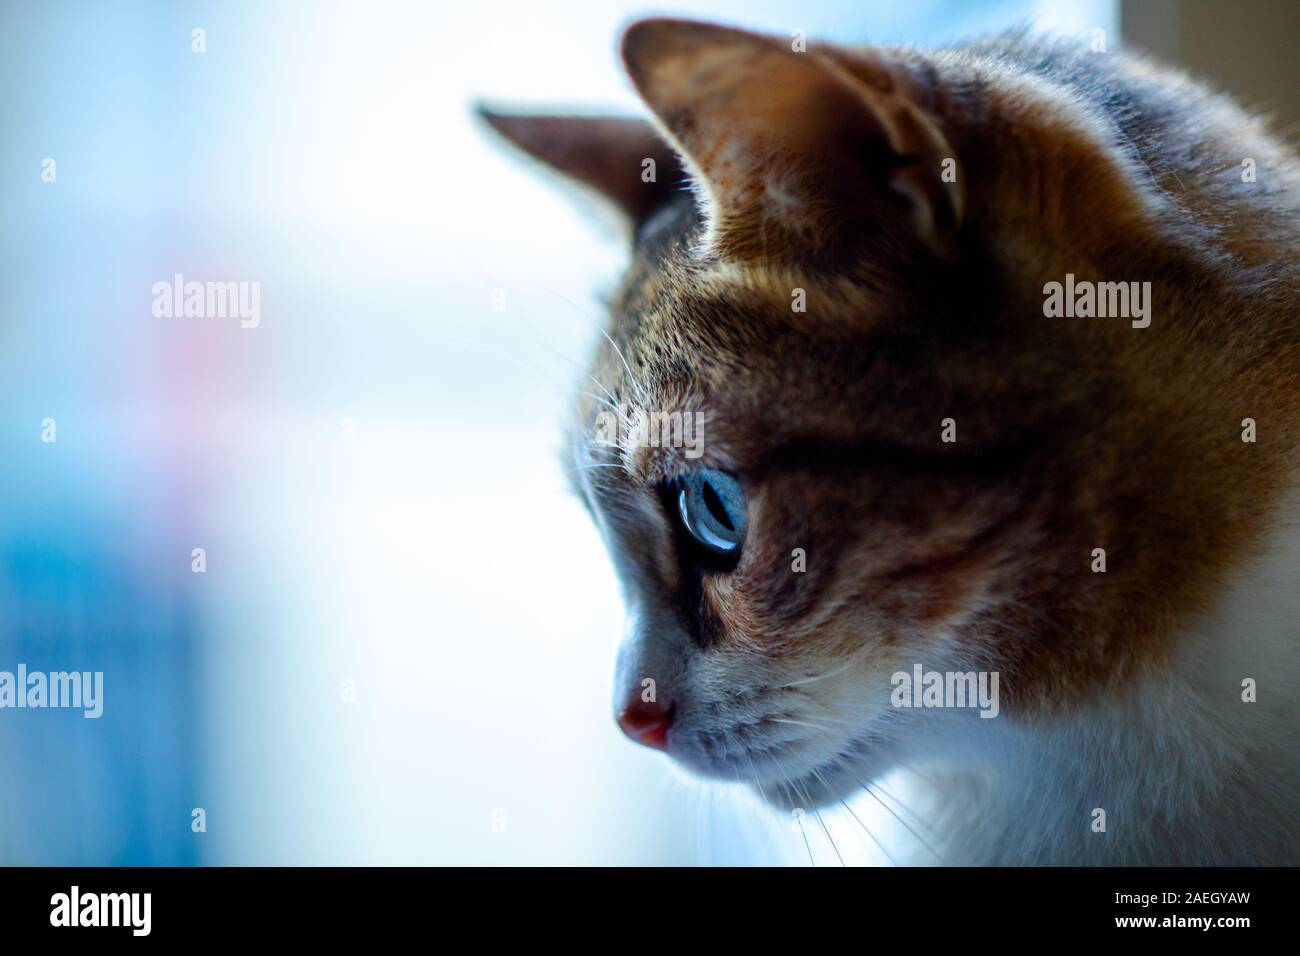 Orange Cat Profile with Window Background Stock Photo